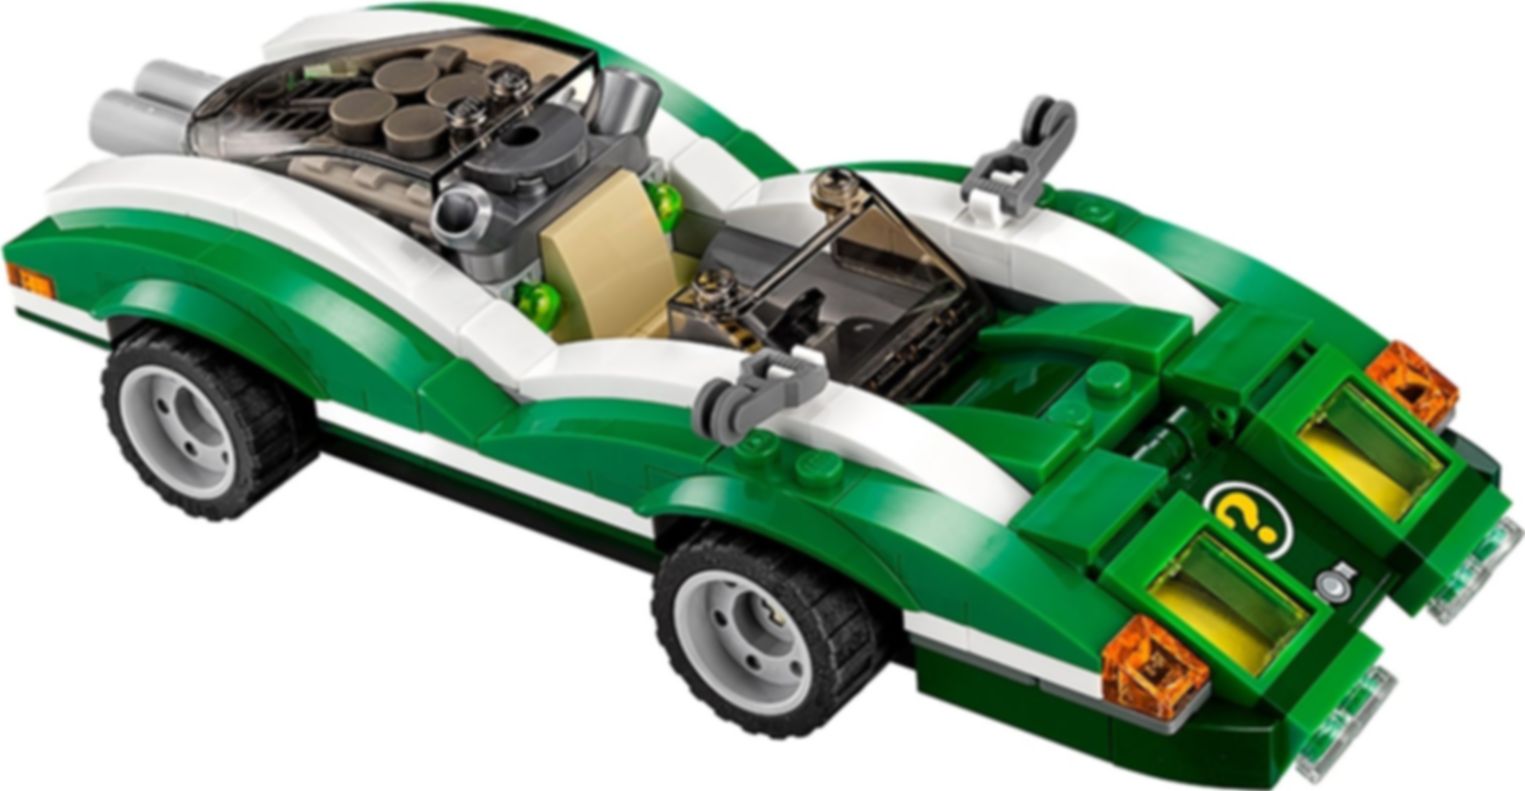 LEGO® Batman Movie The Riddler™ raadsel-racer componenten